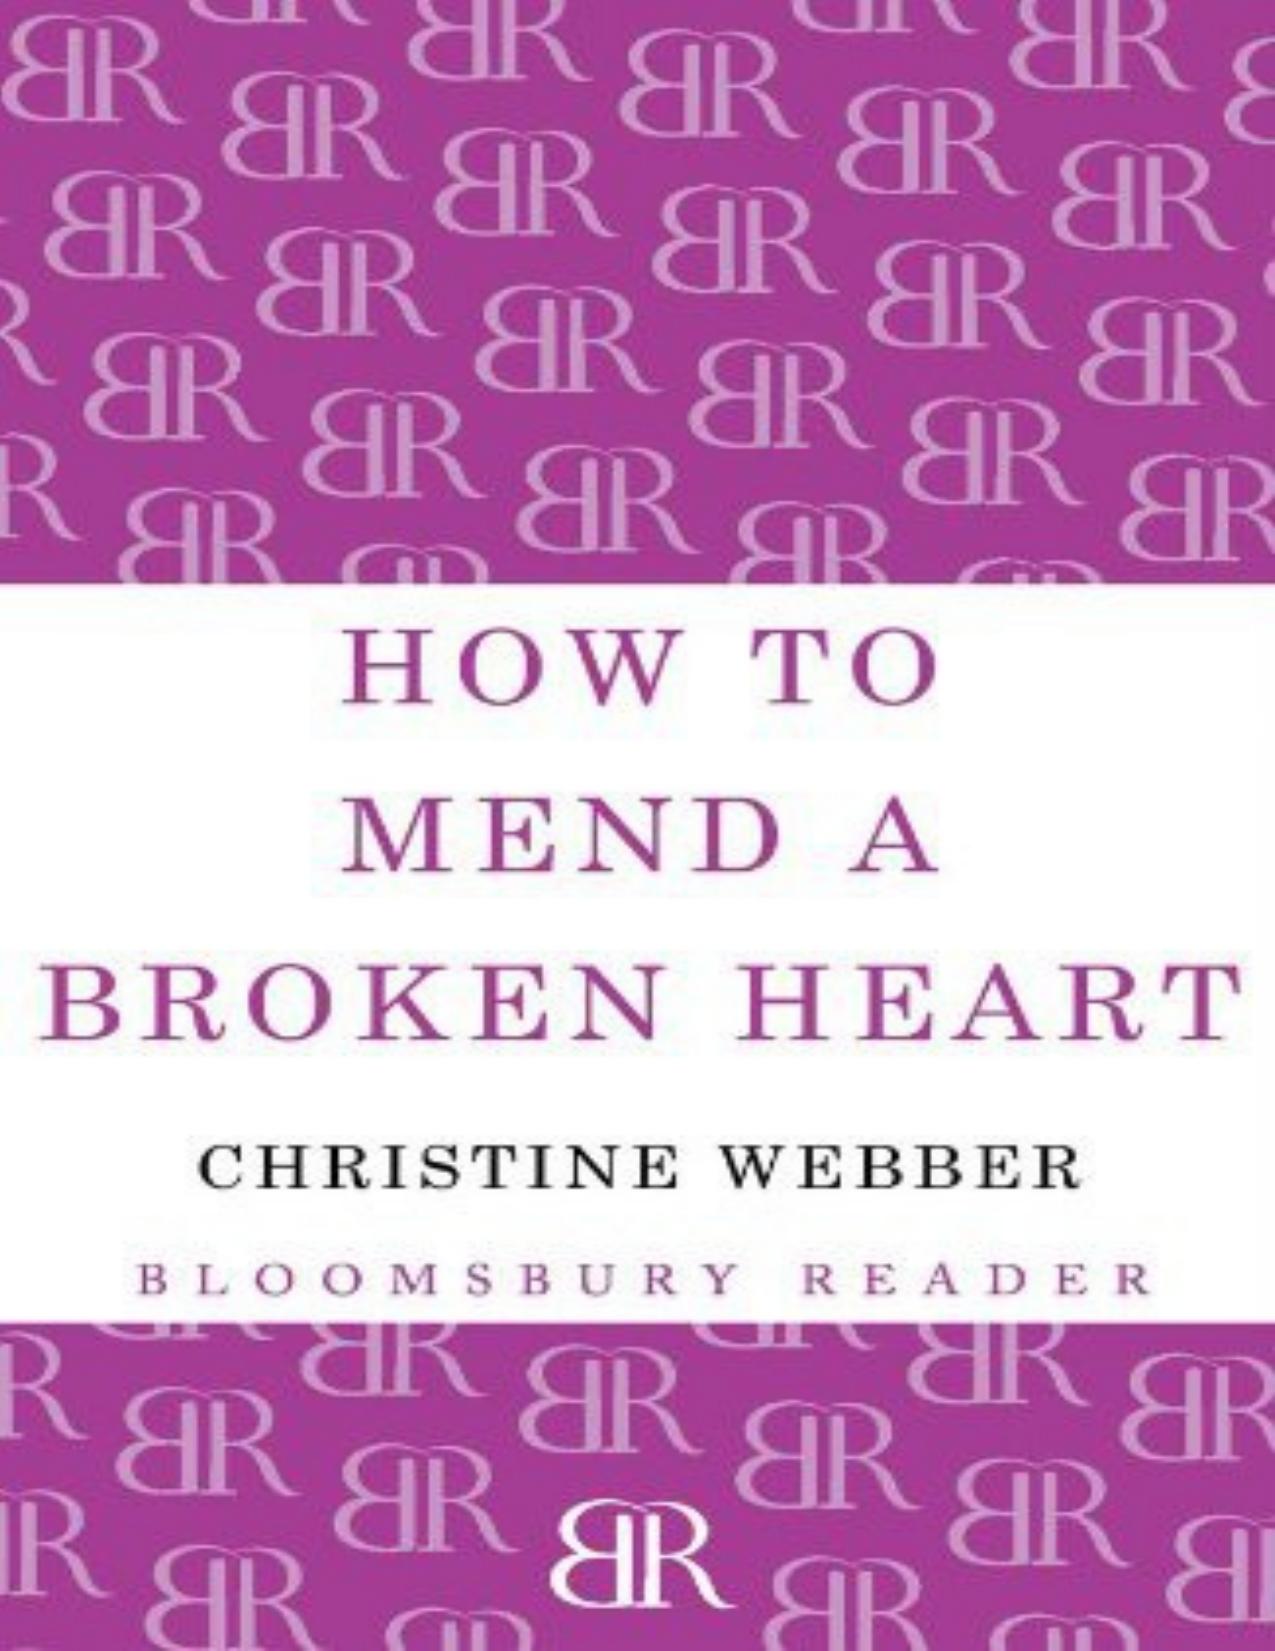 How to Mend a Broken Heart   Christine Webber (E Book)